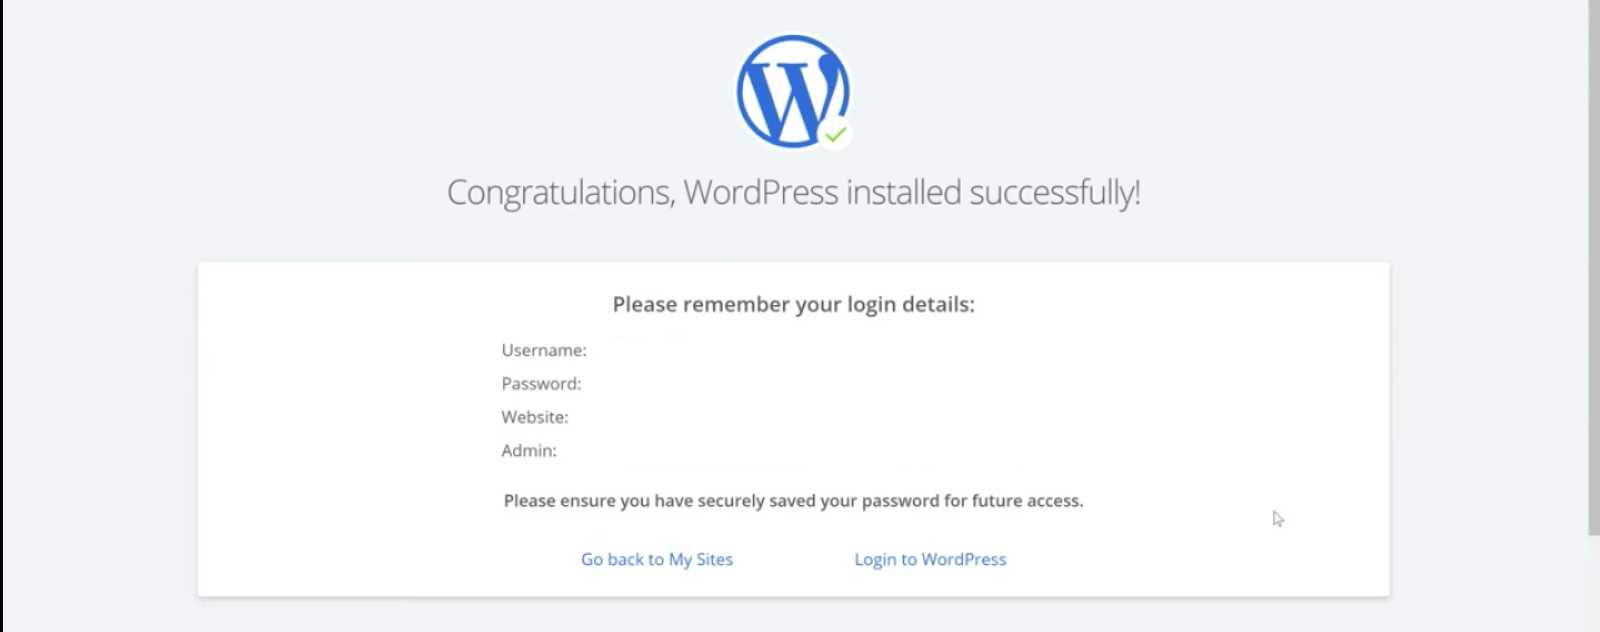 Felicitations, WordPress est installe avec succes